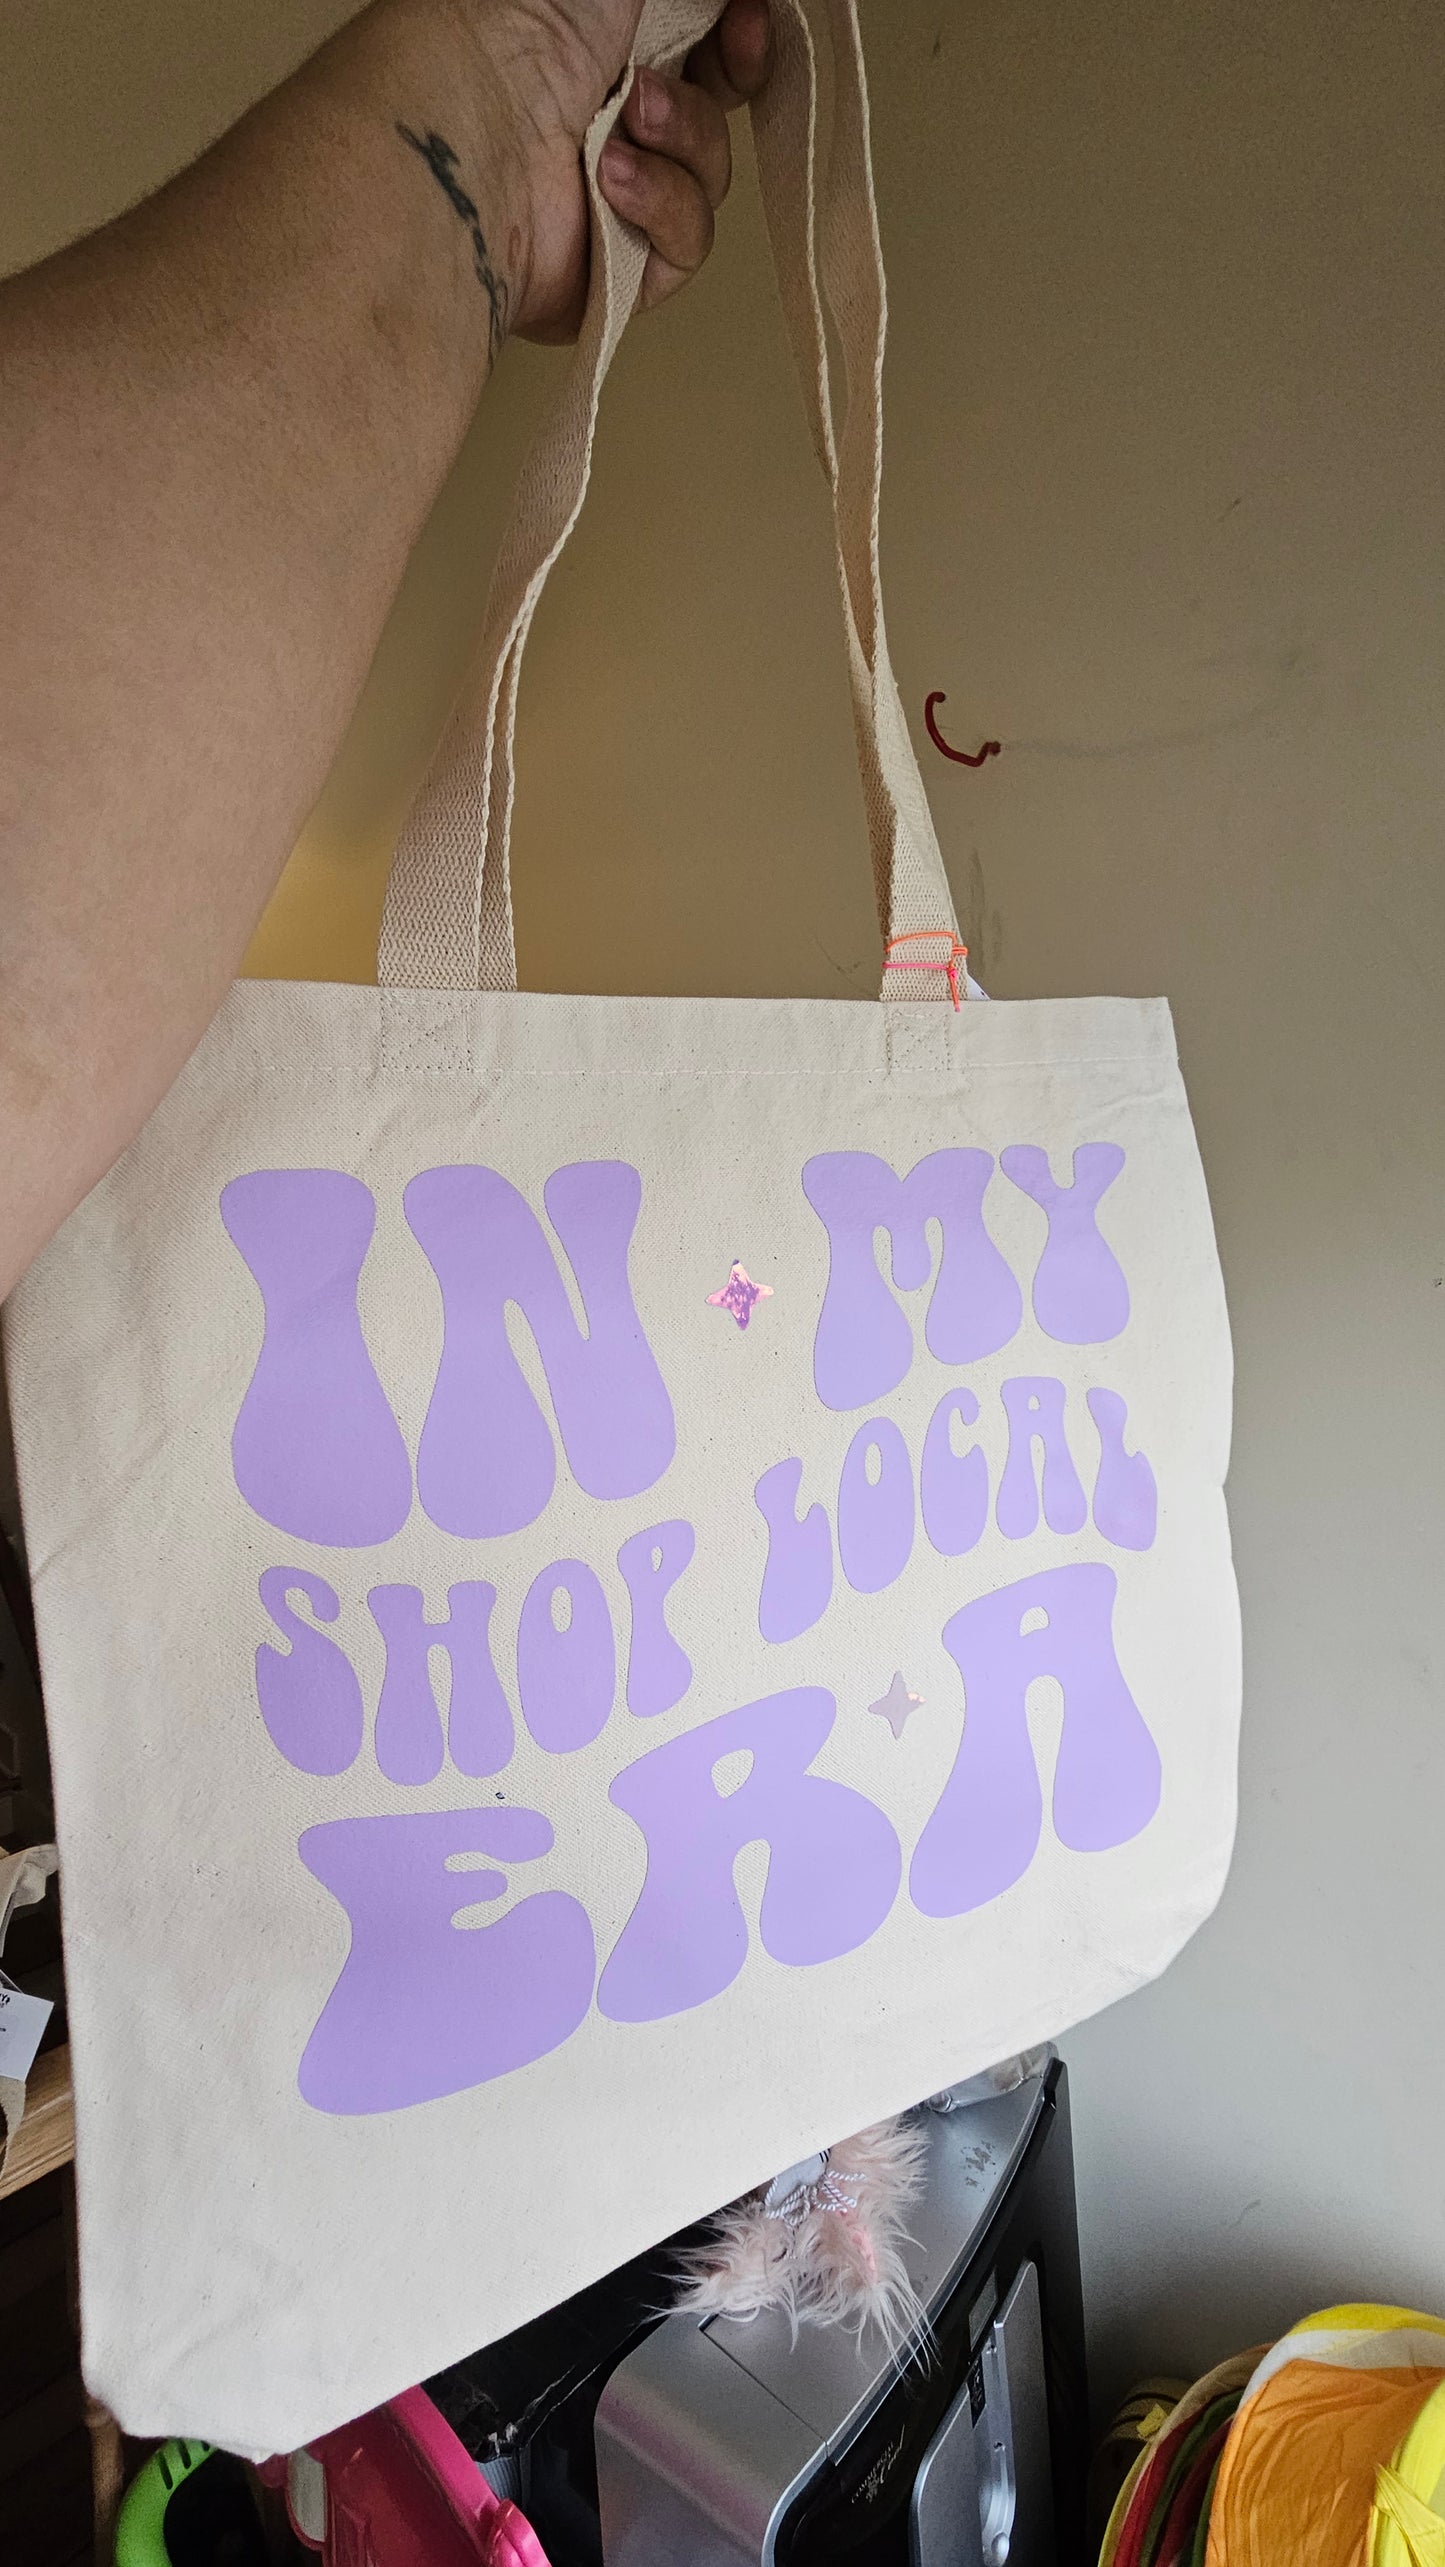 Tote bag: Shop Local